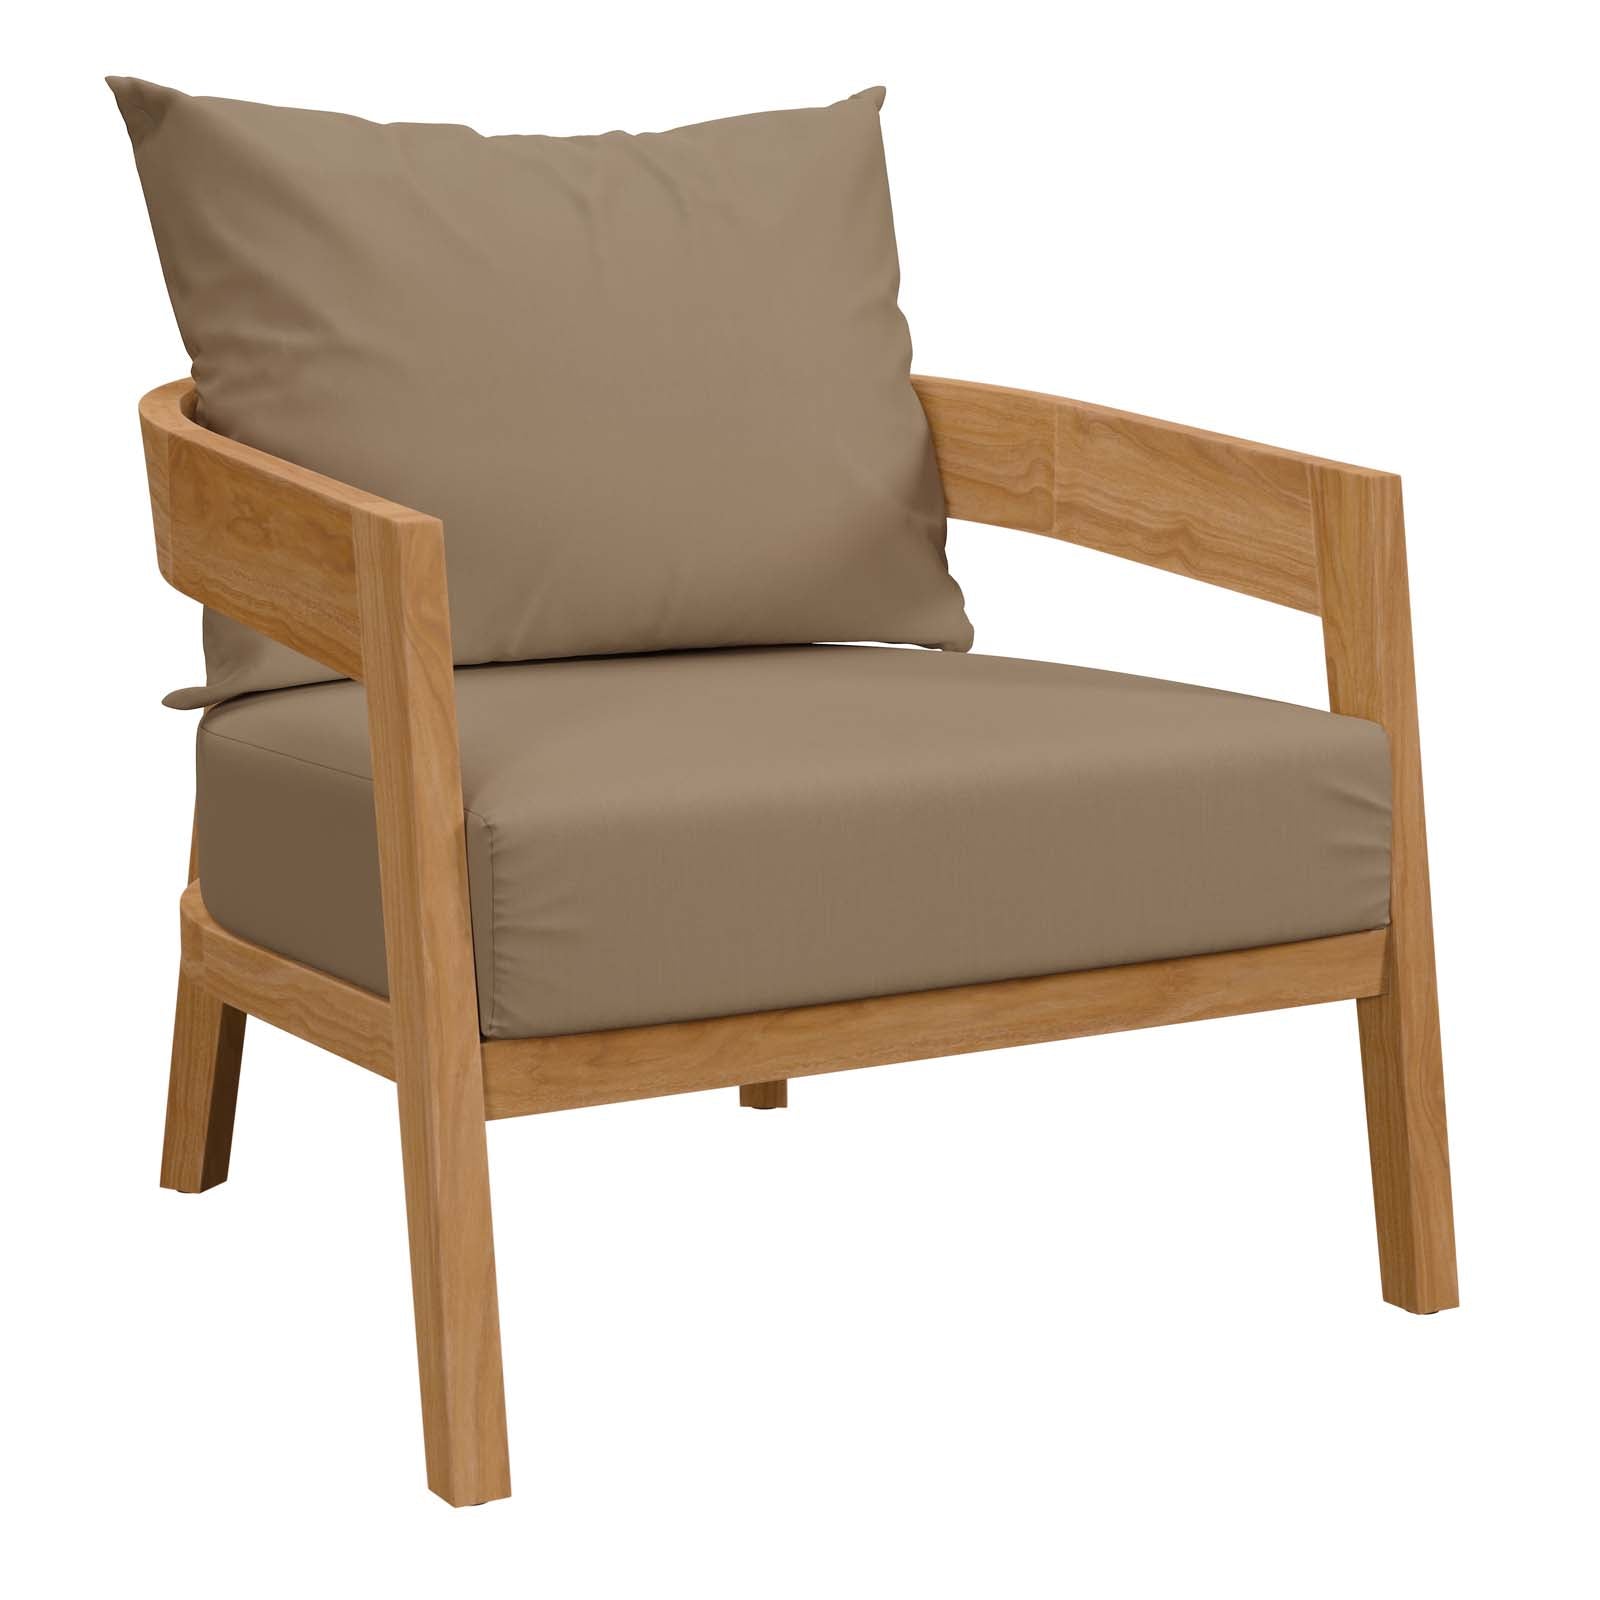 Modway Outdoor Chairs - Brisbane Teak Wood Outdoor Patio Armchair Natural Light Brown